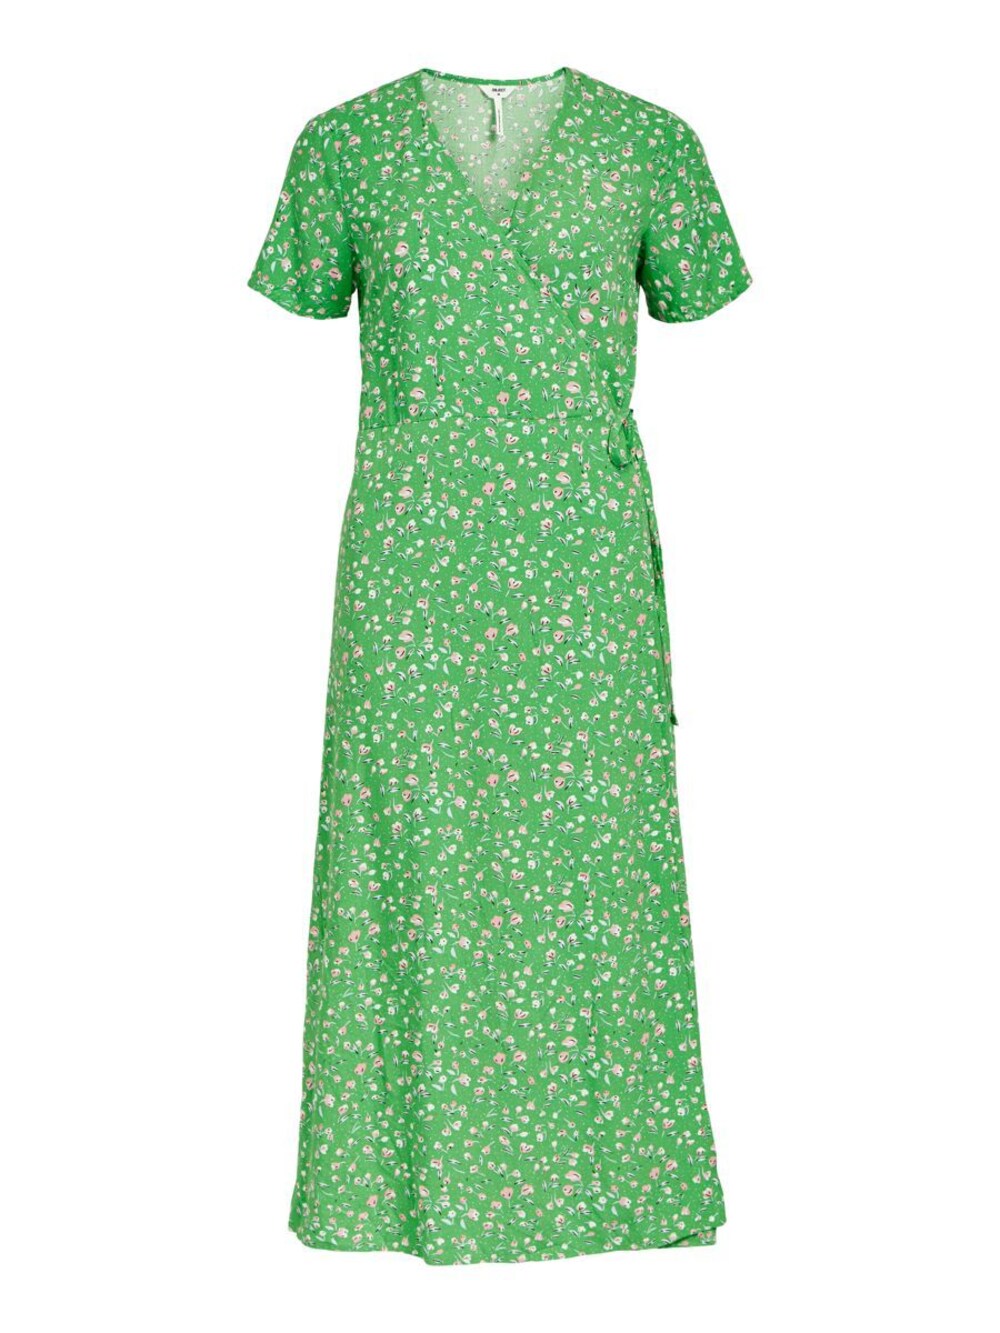 Платье Object JEMA, трава зеленая зеленая трава